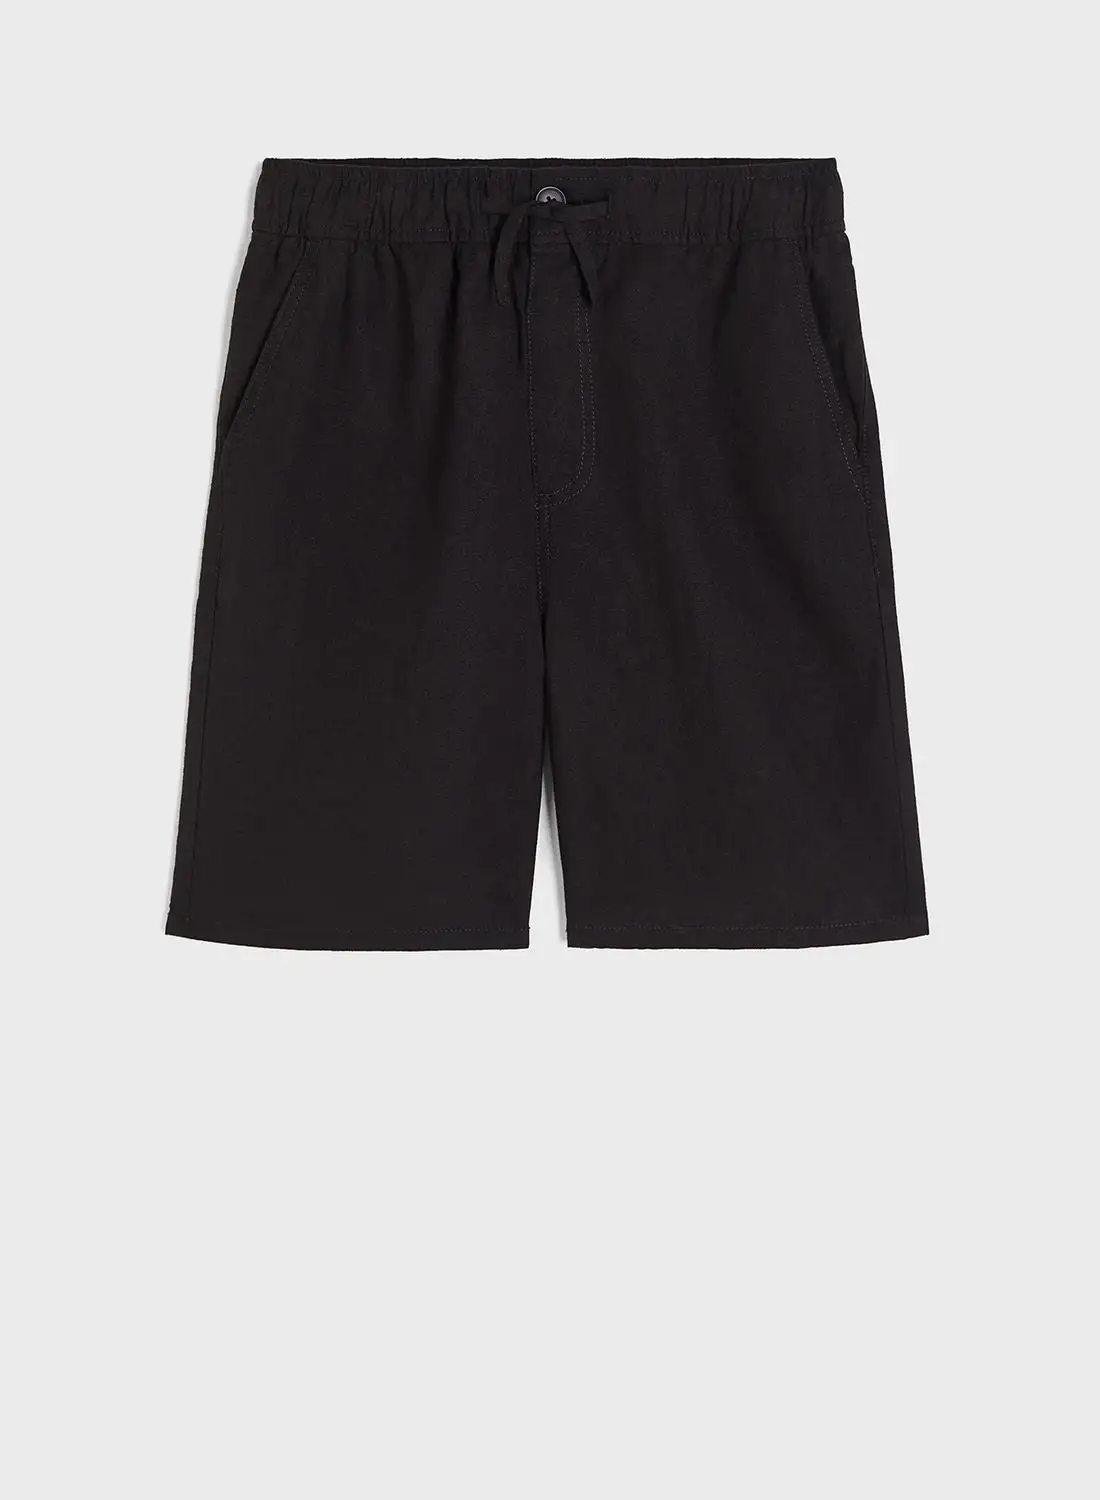 H&M Kids Essential Shorts